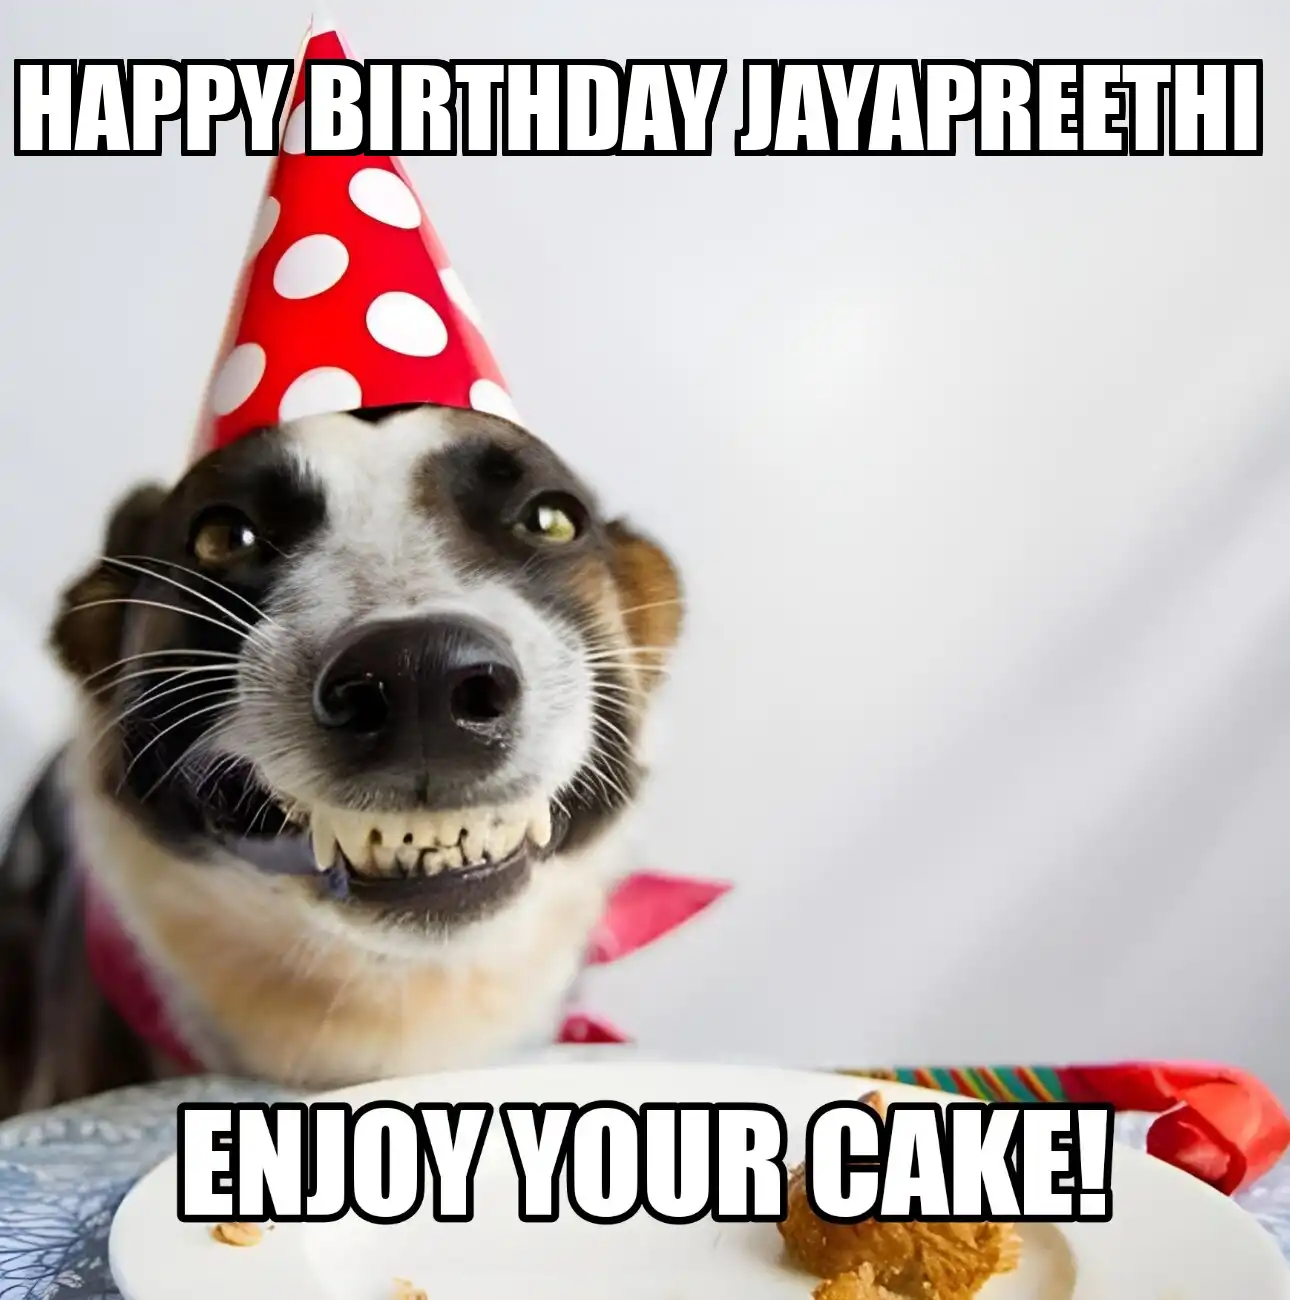 Happy Birthday Jayapreethi Enjoy Your Cake Dog Meme